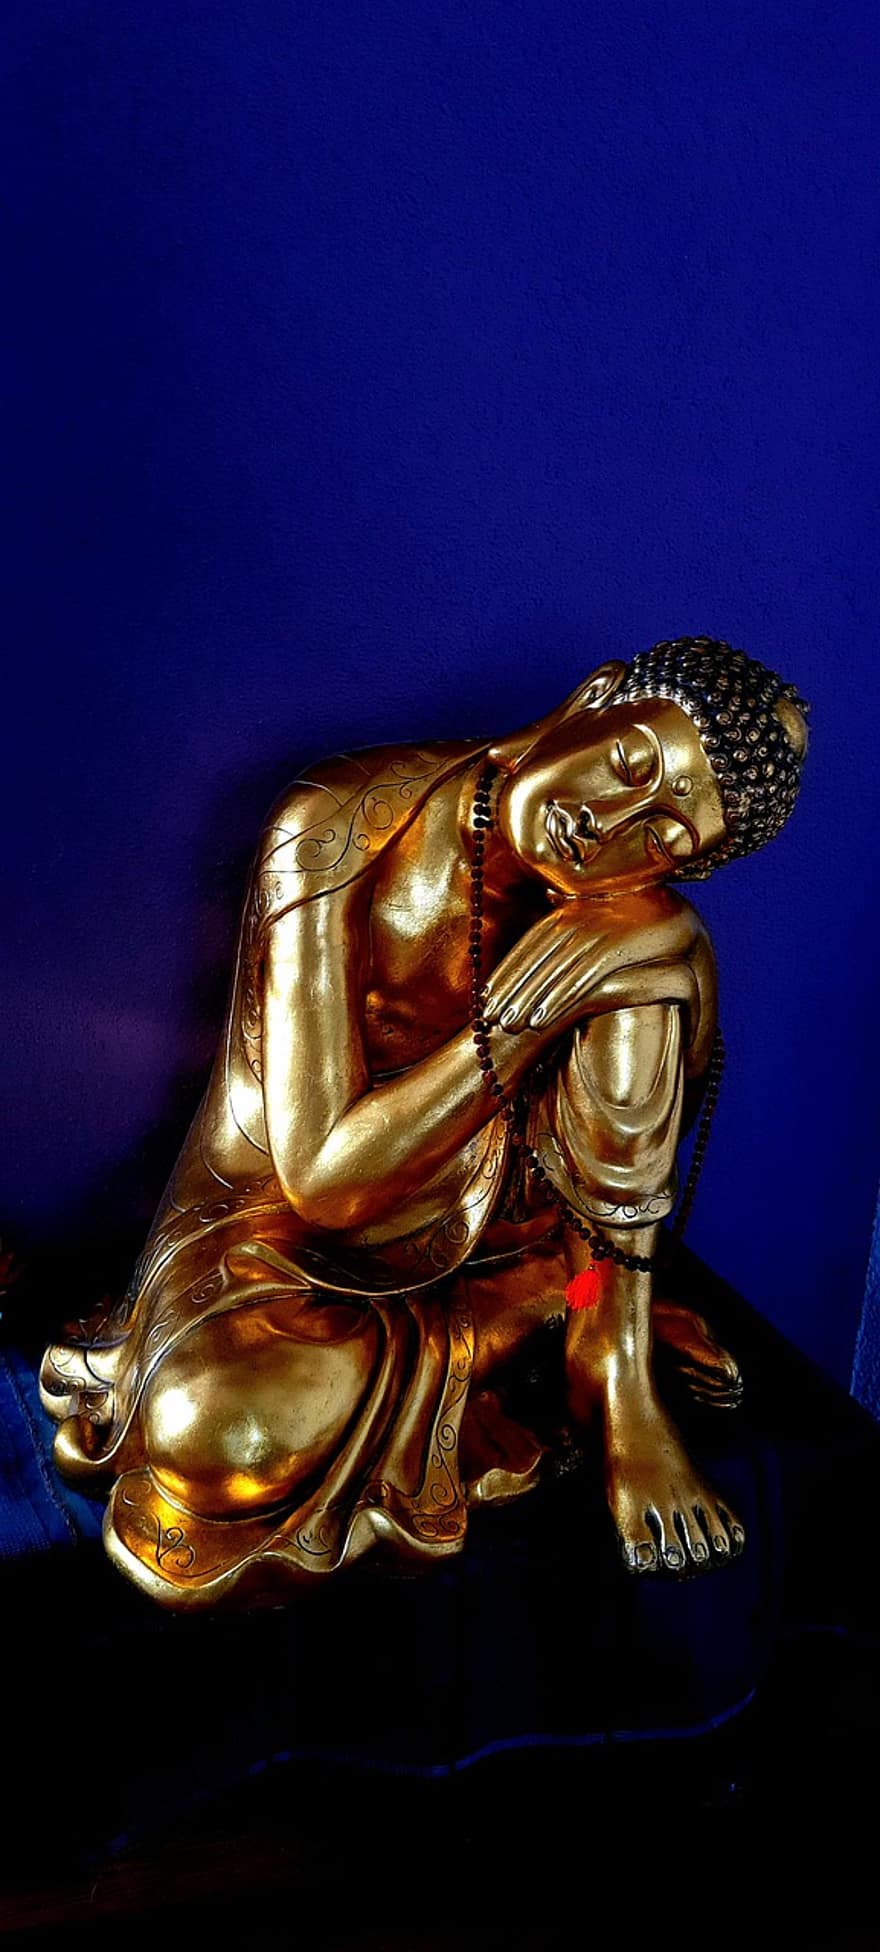 Budha, patung, yoga, meditasi, emas, zen, bersantai, relaksasi, agama, agama Buddha, kerohanian